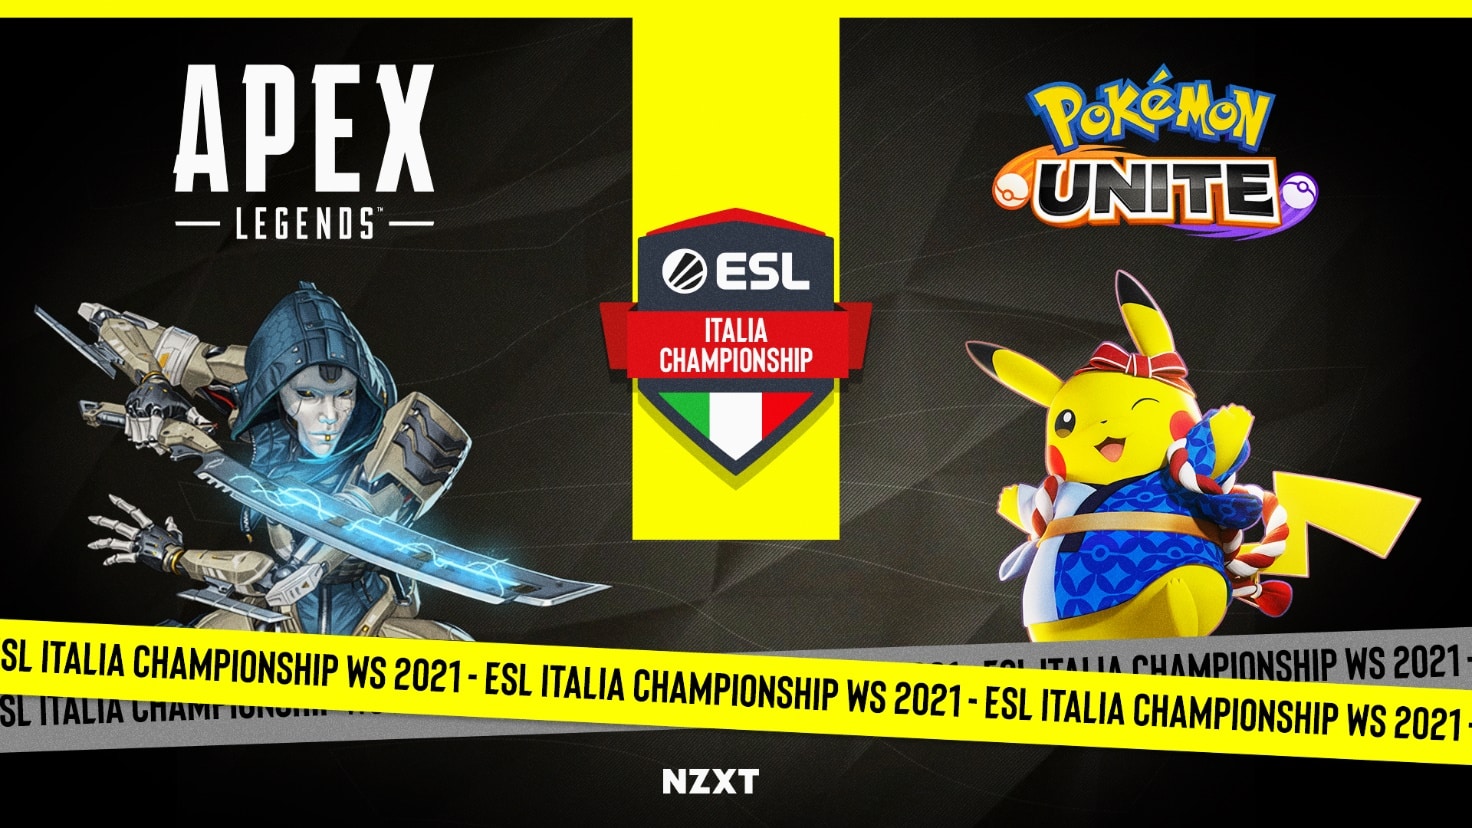 ESL Italia Championship Apex Legends Pokémon Unite